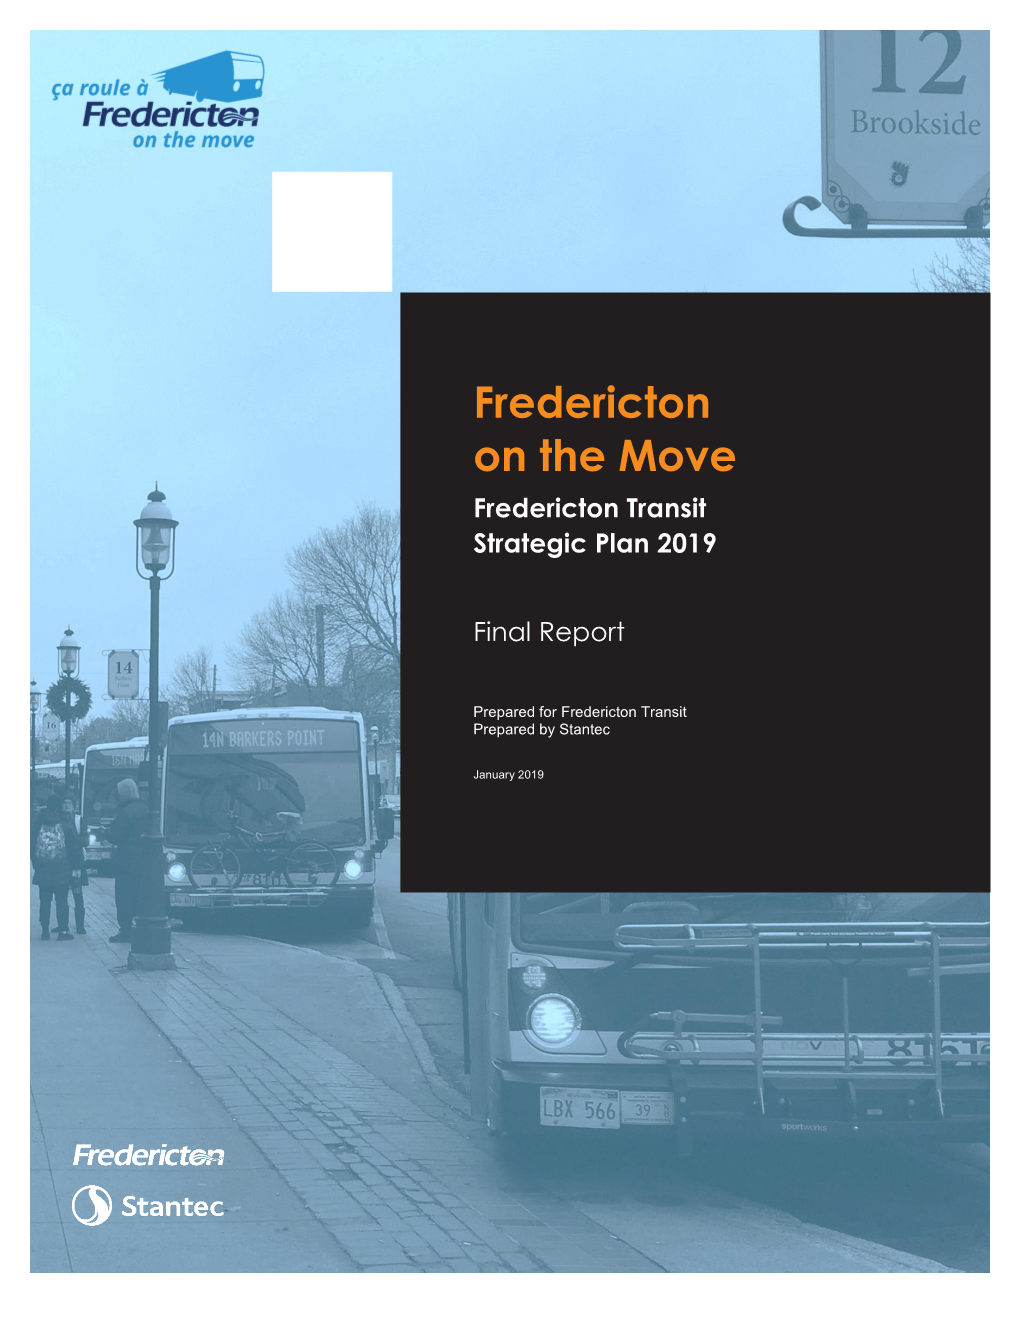 Fredericton Transit Strategic Plan 2019 Final Report